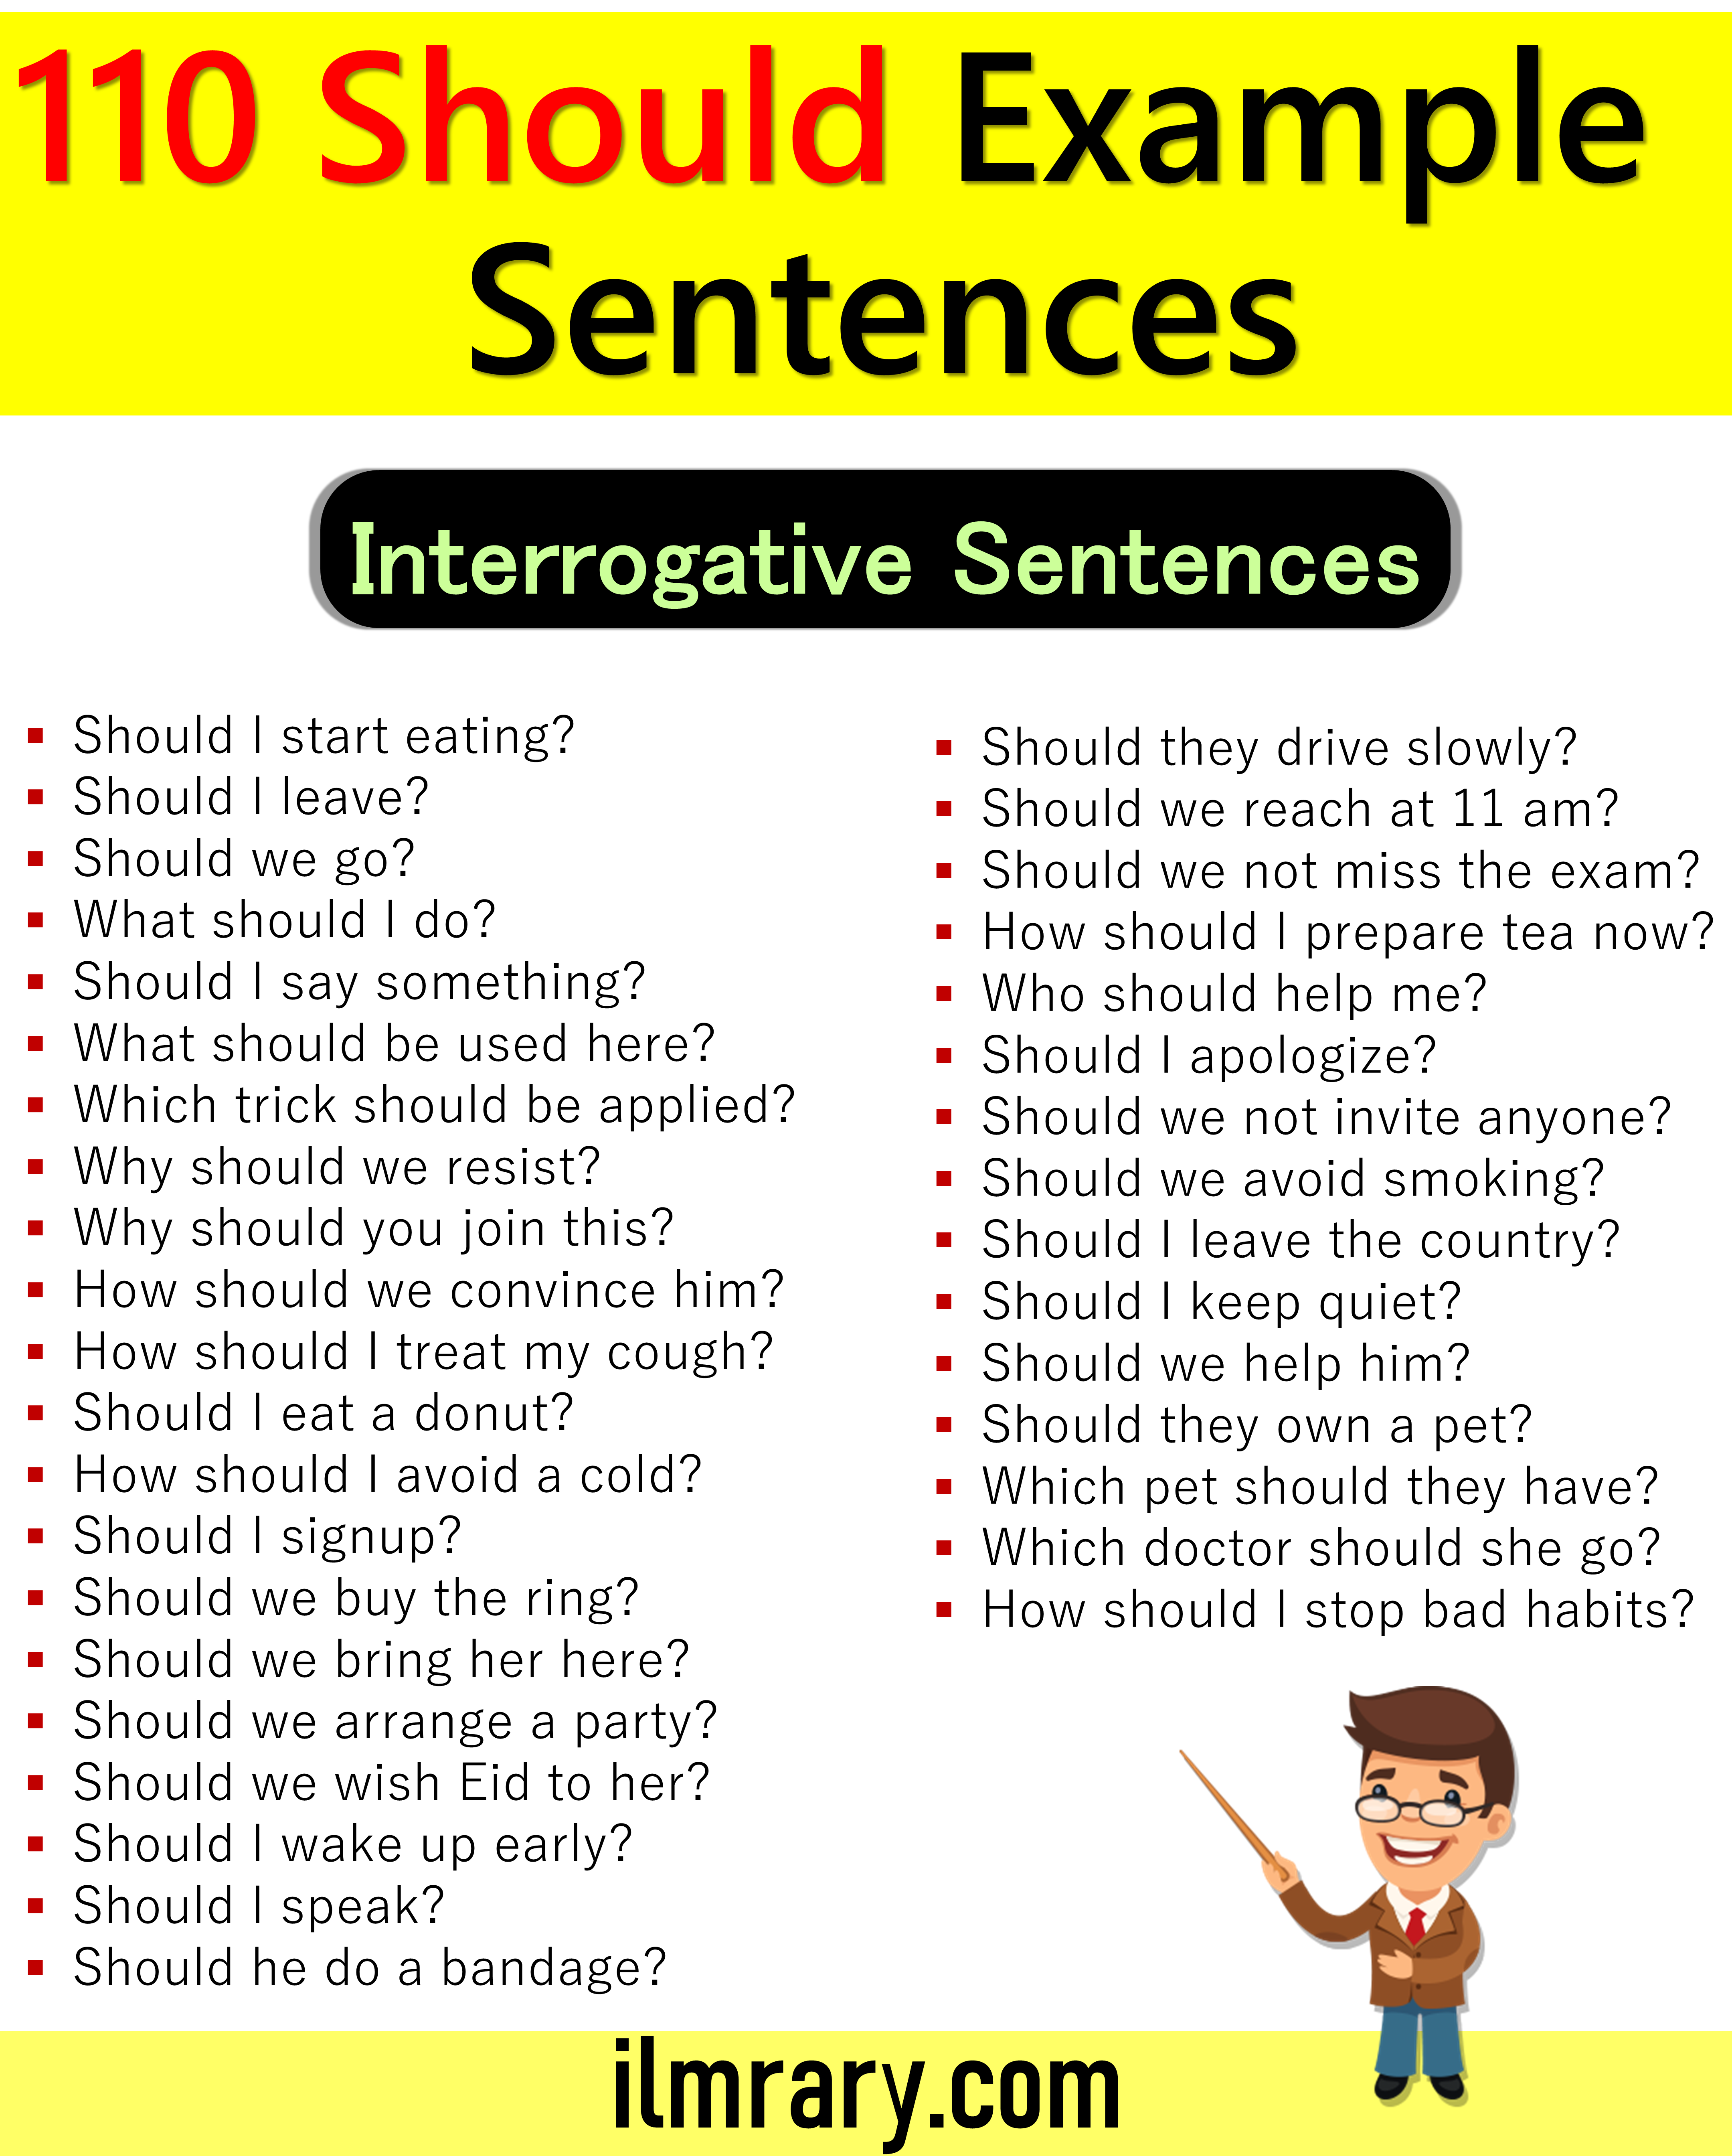 Use Should  in interrogative sentences | 90 Sentences Using Should